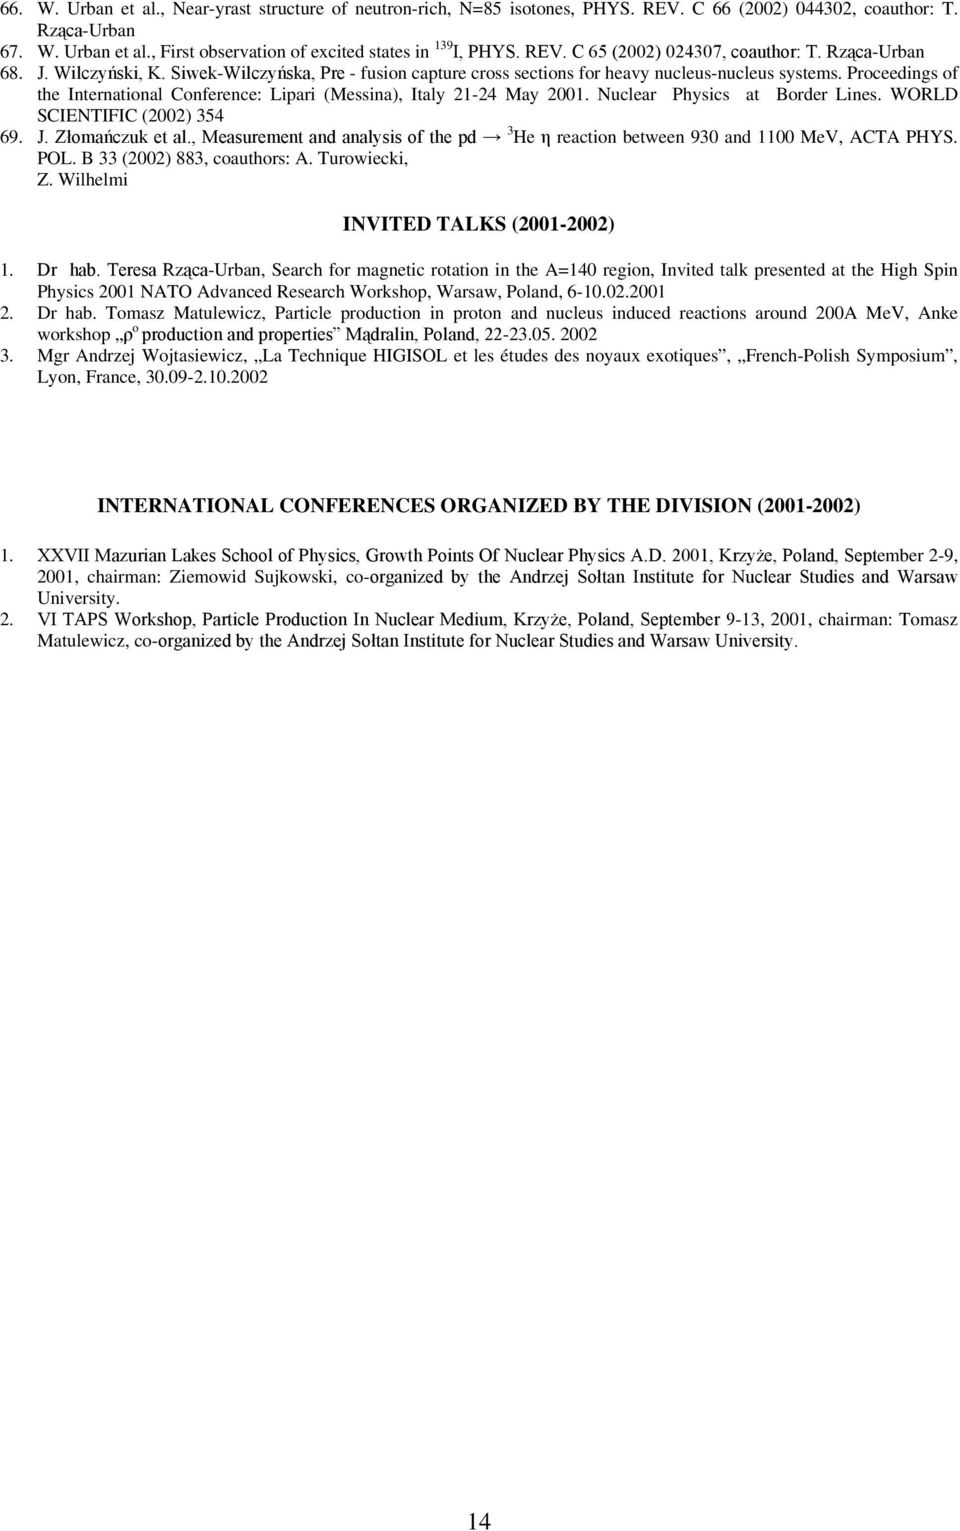 Proceedings of the International Conference: Lipari (Messina), Italy 21-24 May 2001. Nuclear Physics at Border Lines. WORLD SCIENTIFIC (2002) 354 69. J. Złomańczuk et al.